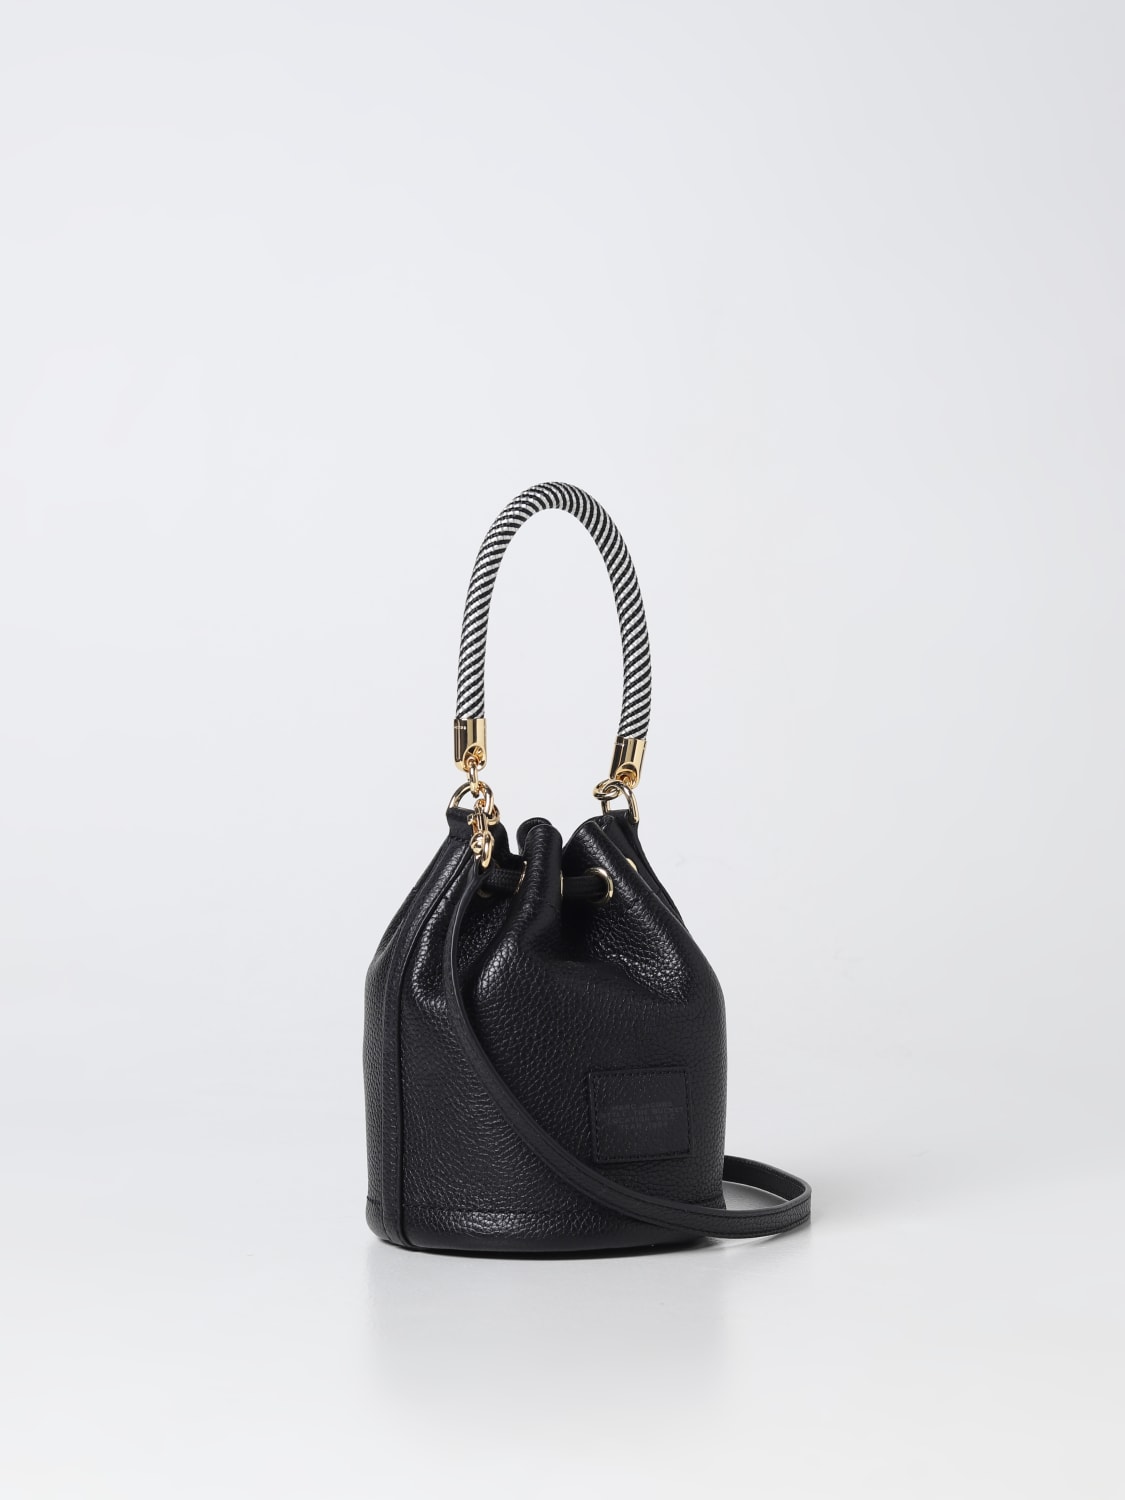 Marc Jacobs Handbags for Women